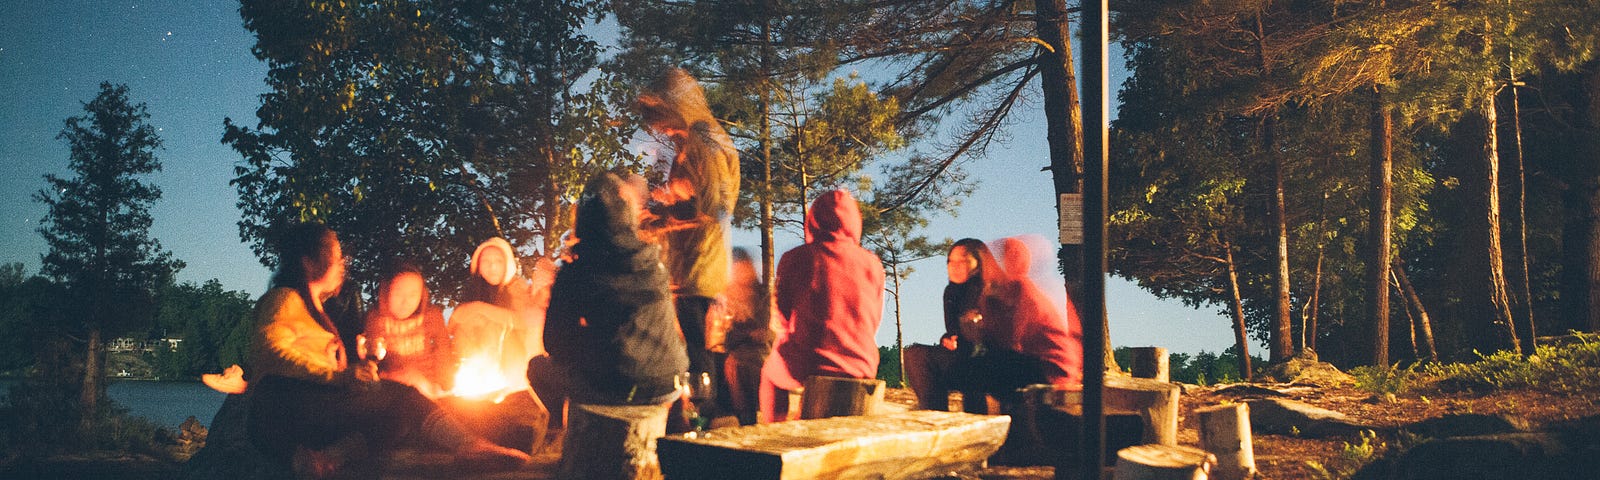 teenagers around a campfire